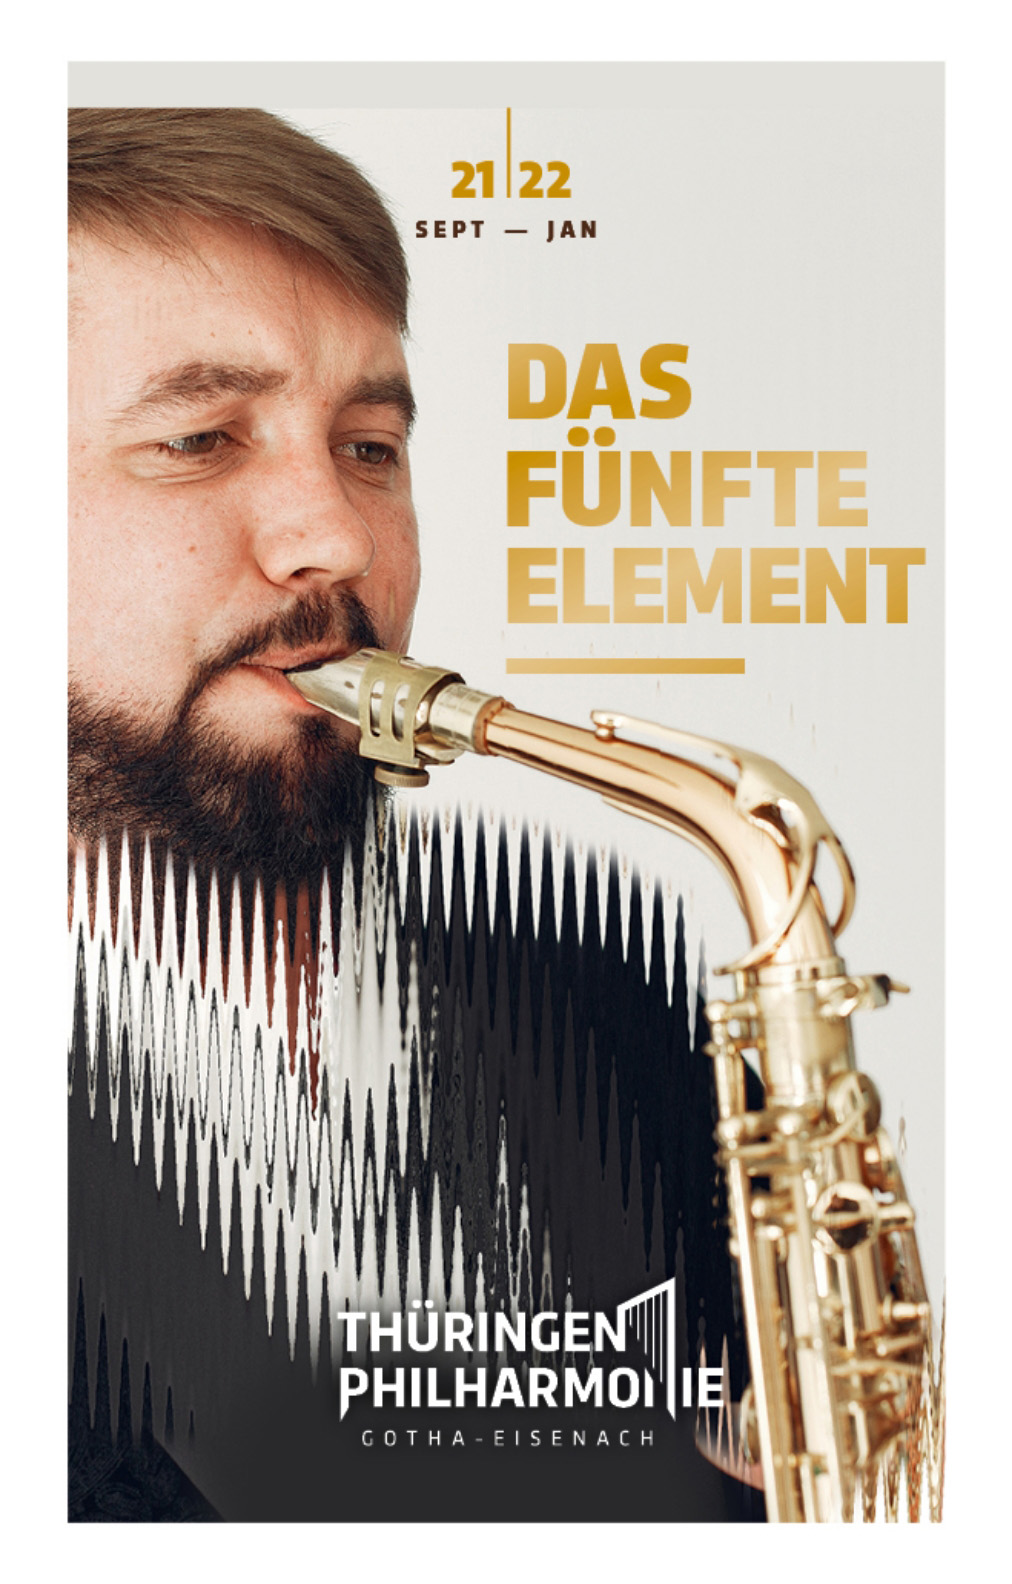 Poster draft visualizing musical vibration: shimmering trumpeter